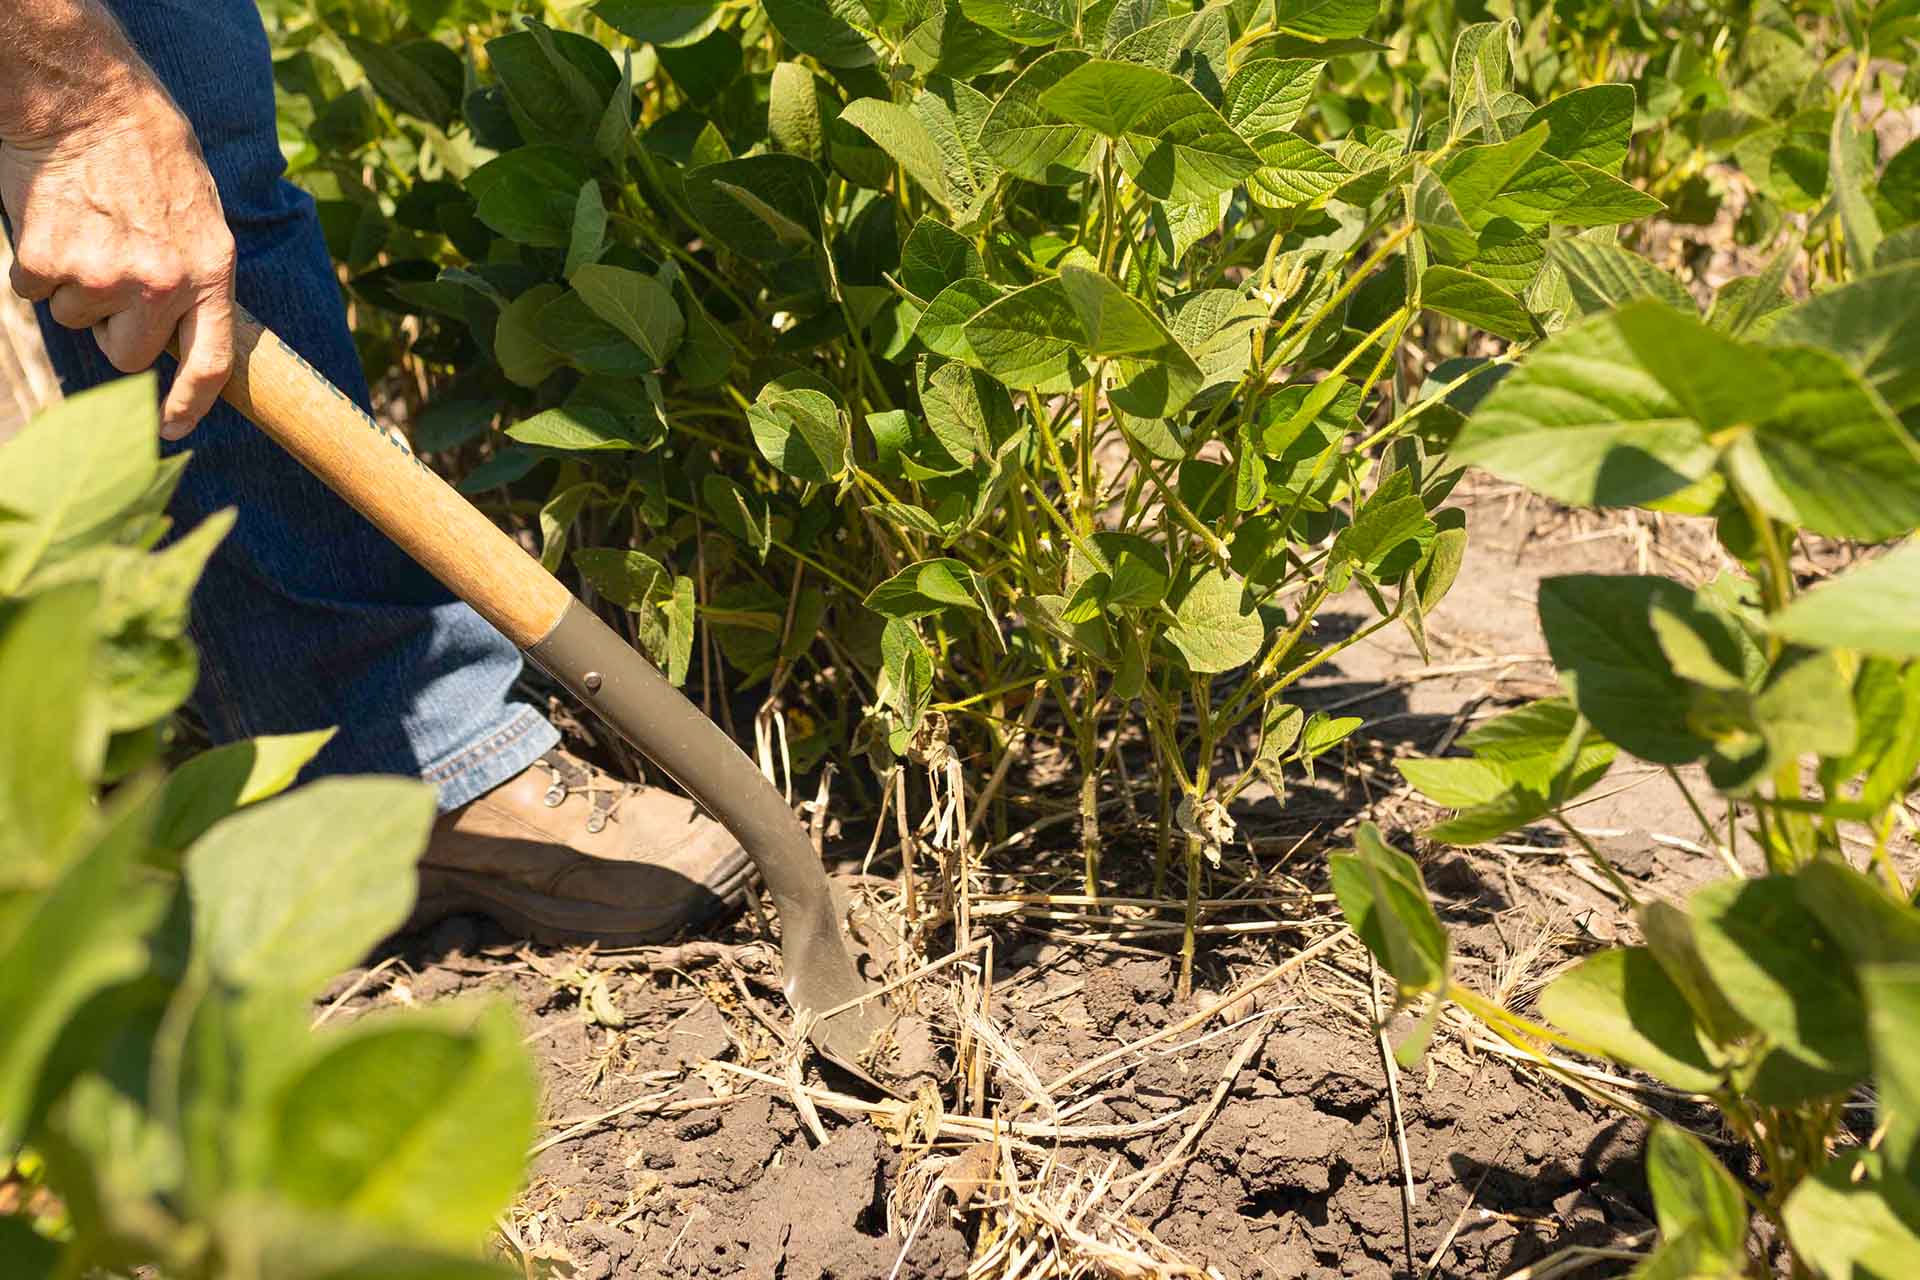 Digging dirt near soybeans